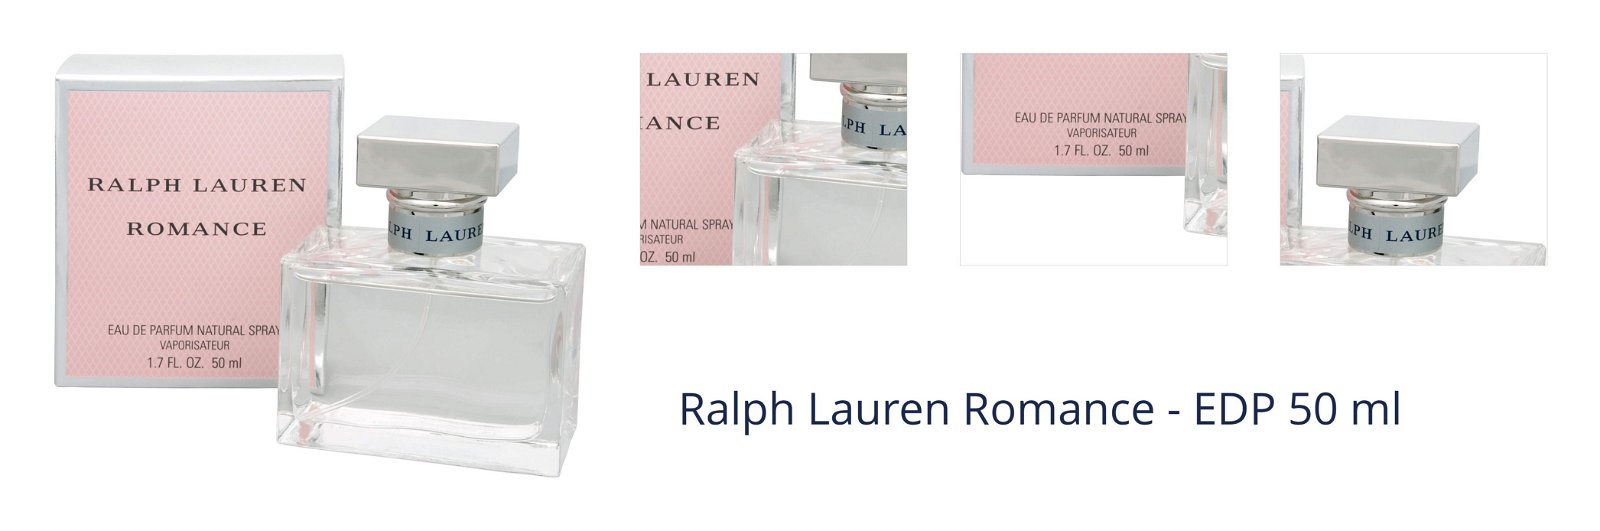 Ralph Lauren Romance - EDP 50 ml 1